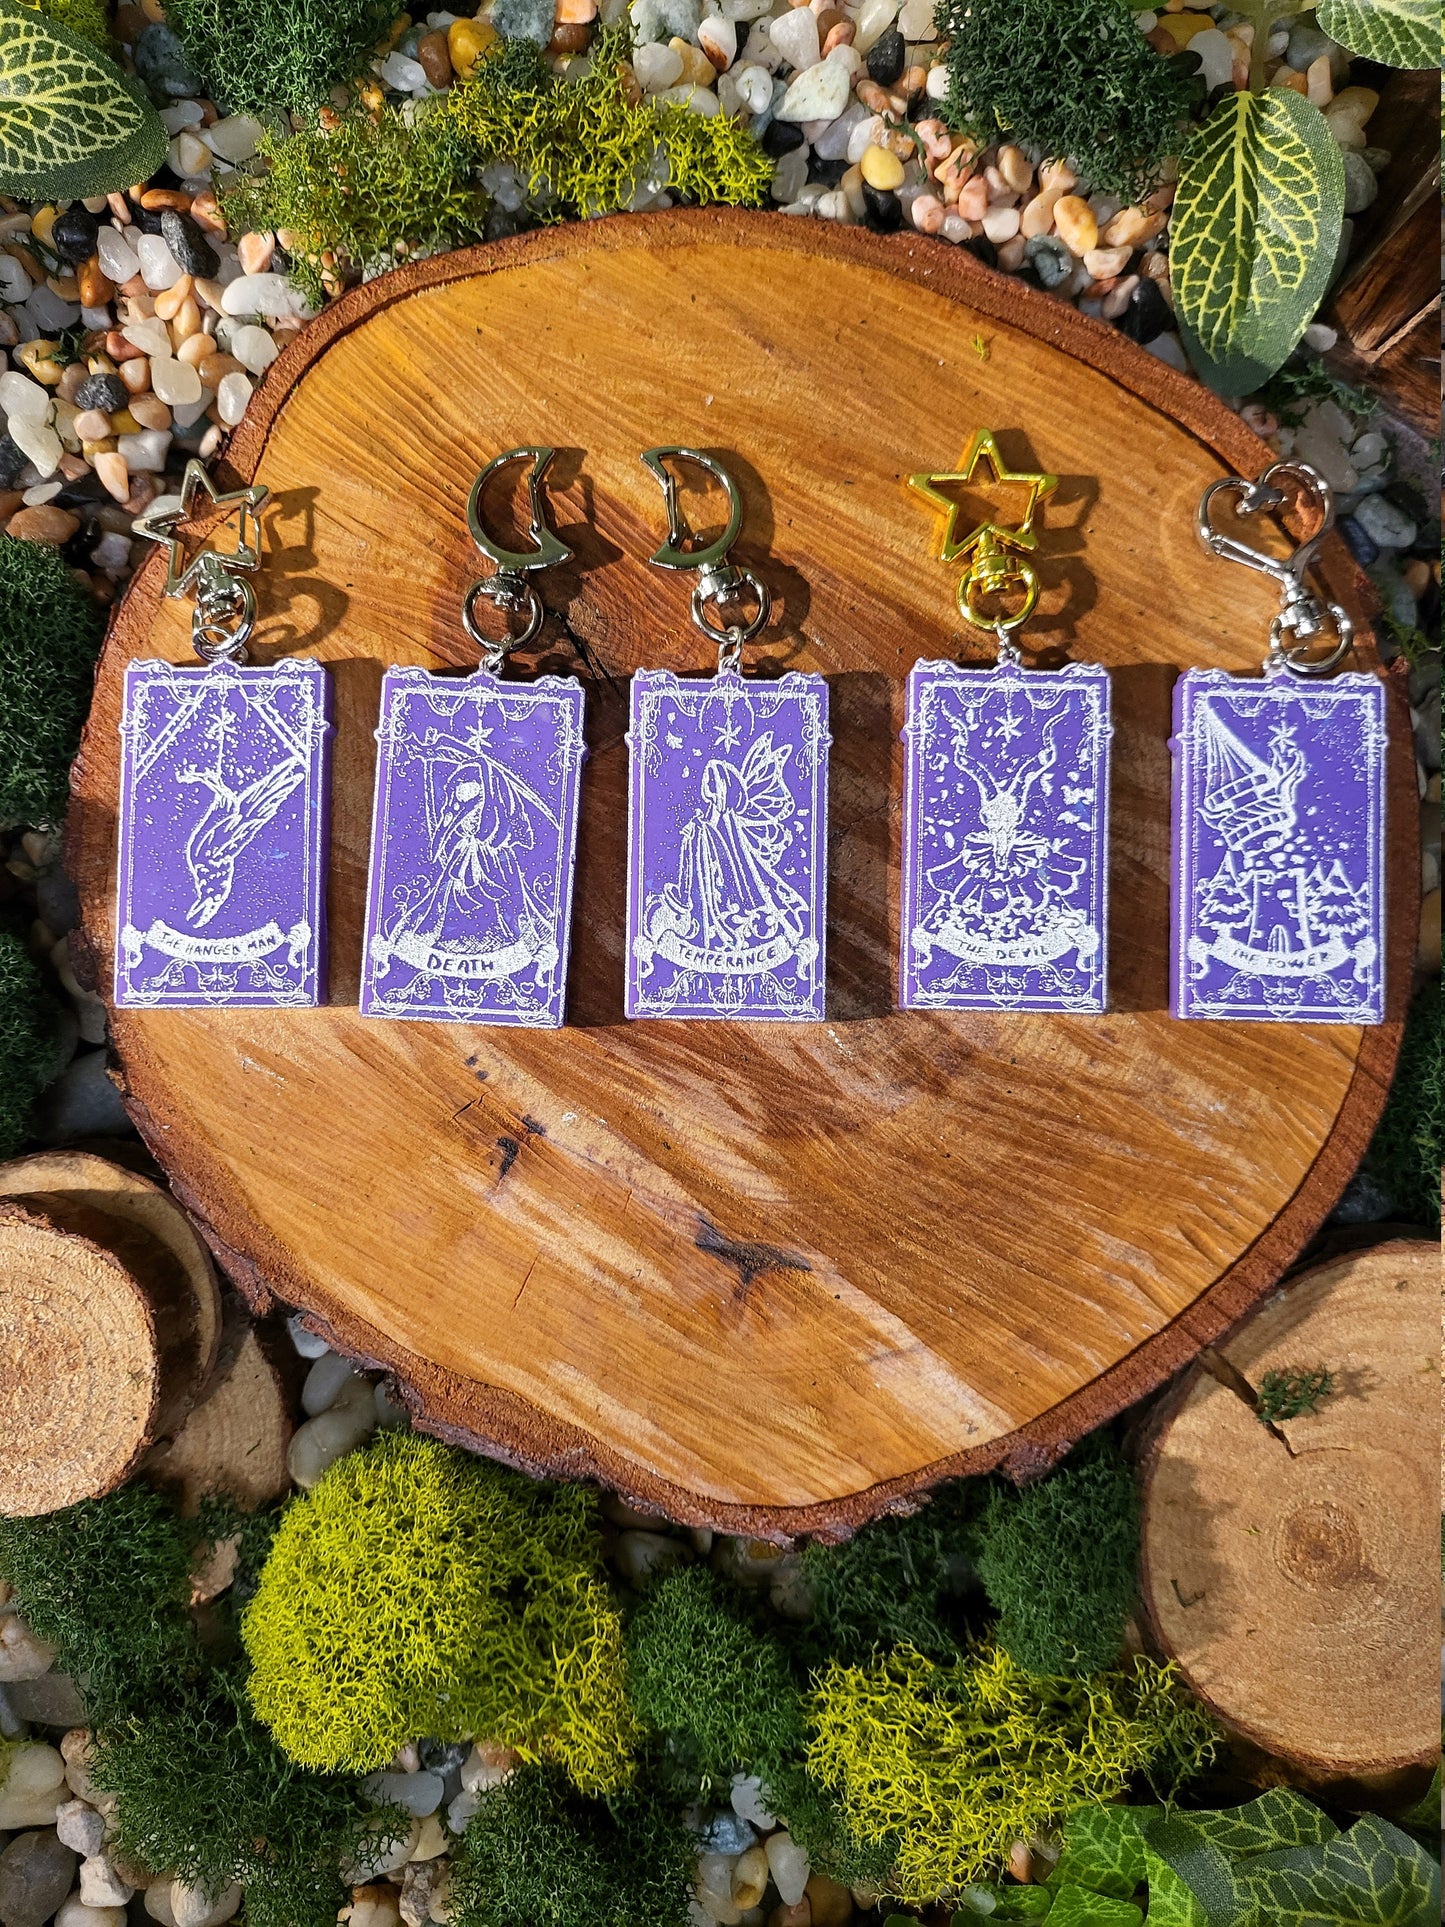 Purple and White Mini Tarot Card Keychains